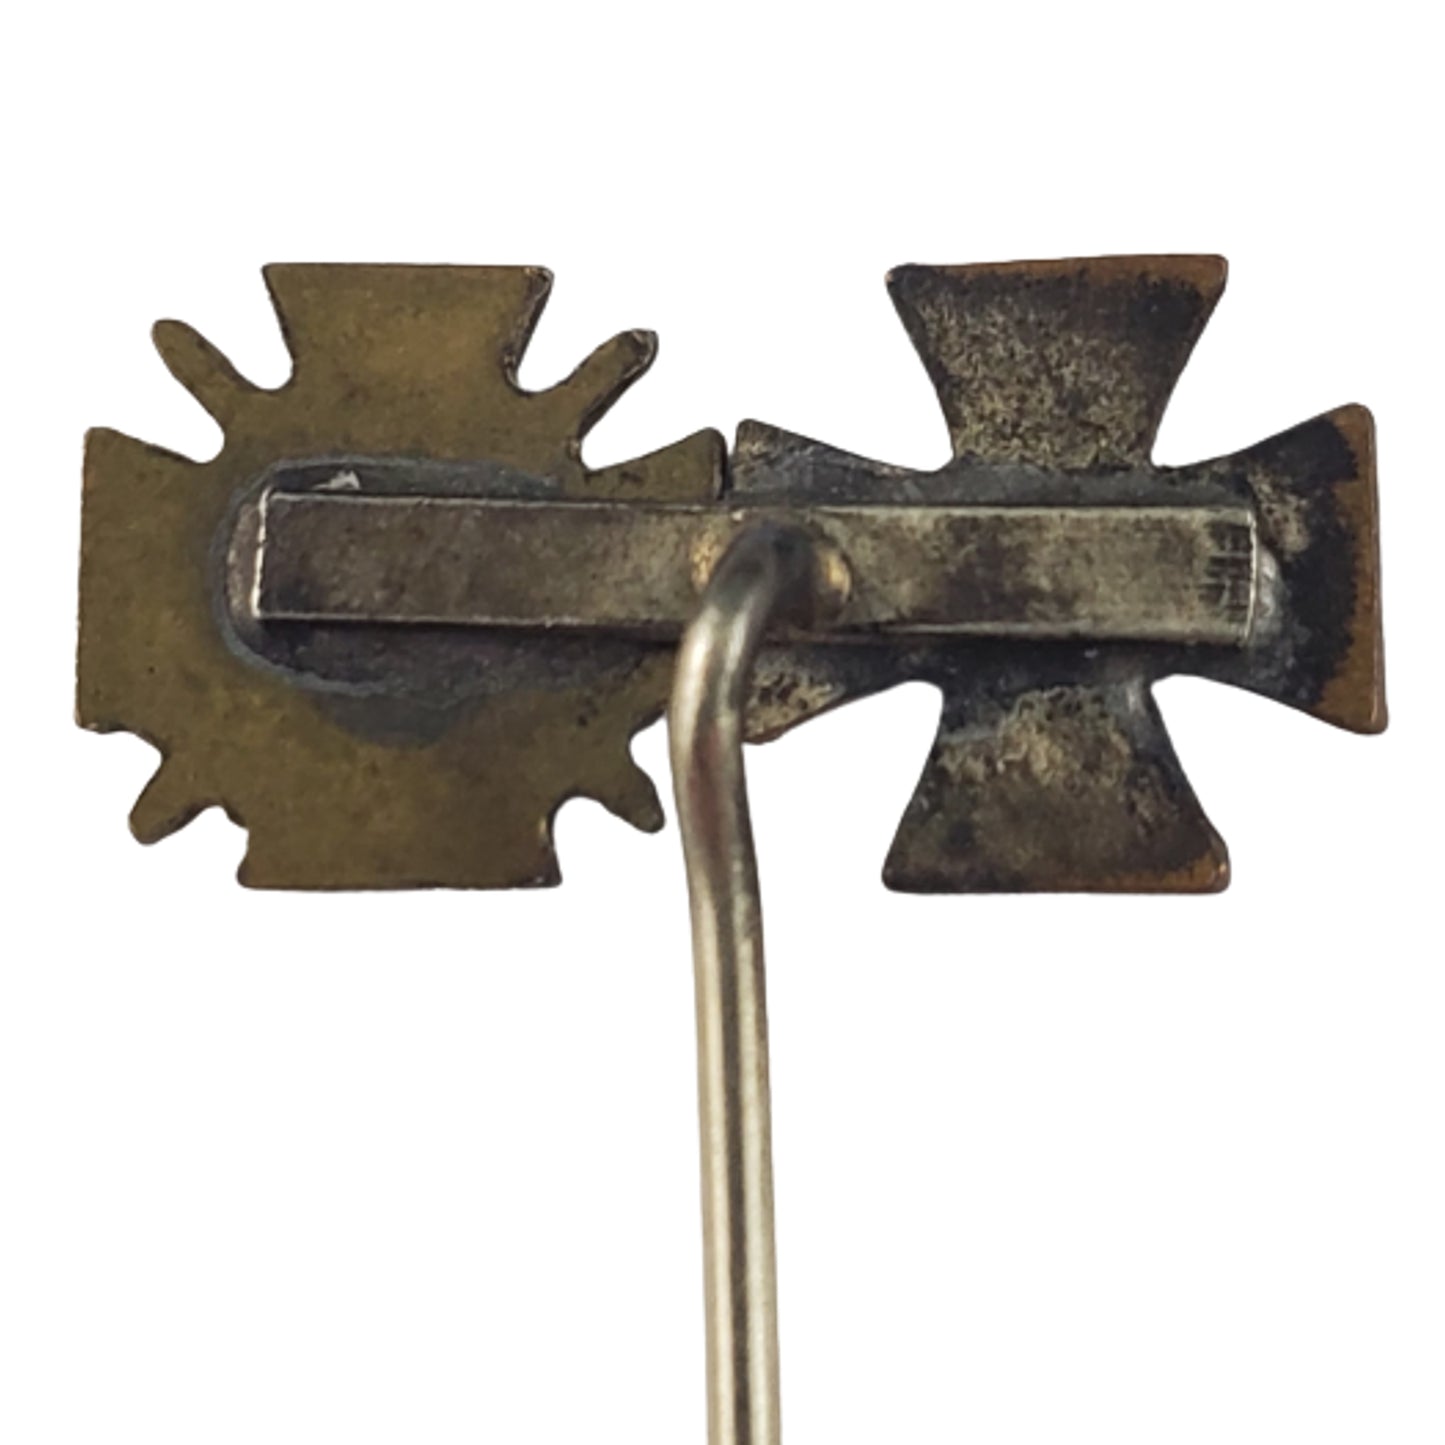 WW1 German Iron Cross - 1914-1918 Cross Lapel Pin